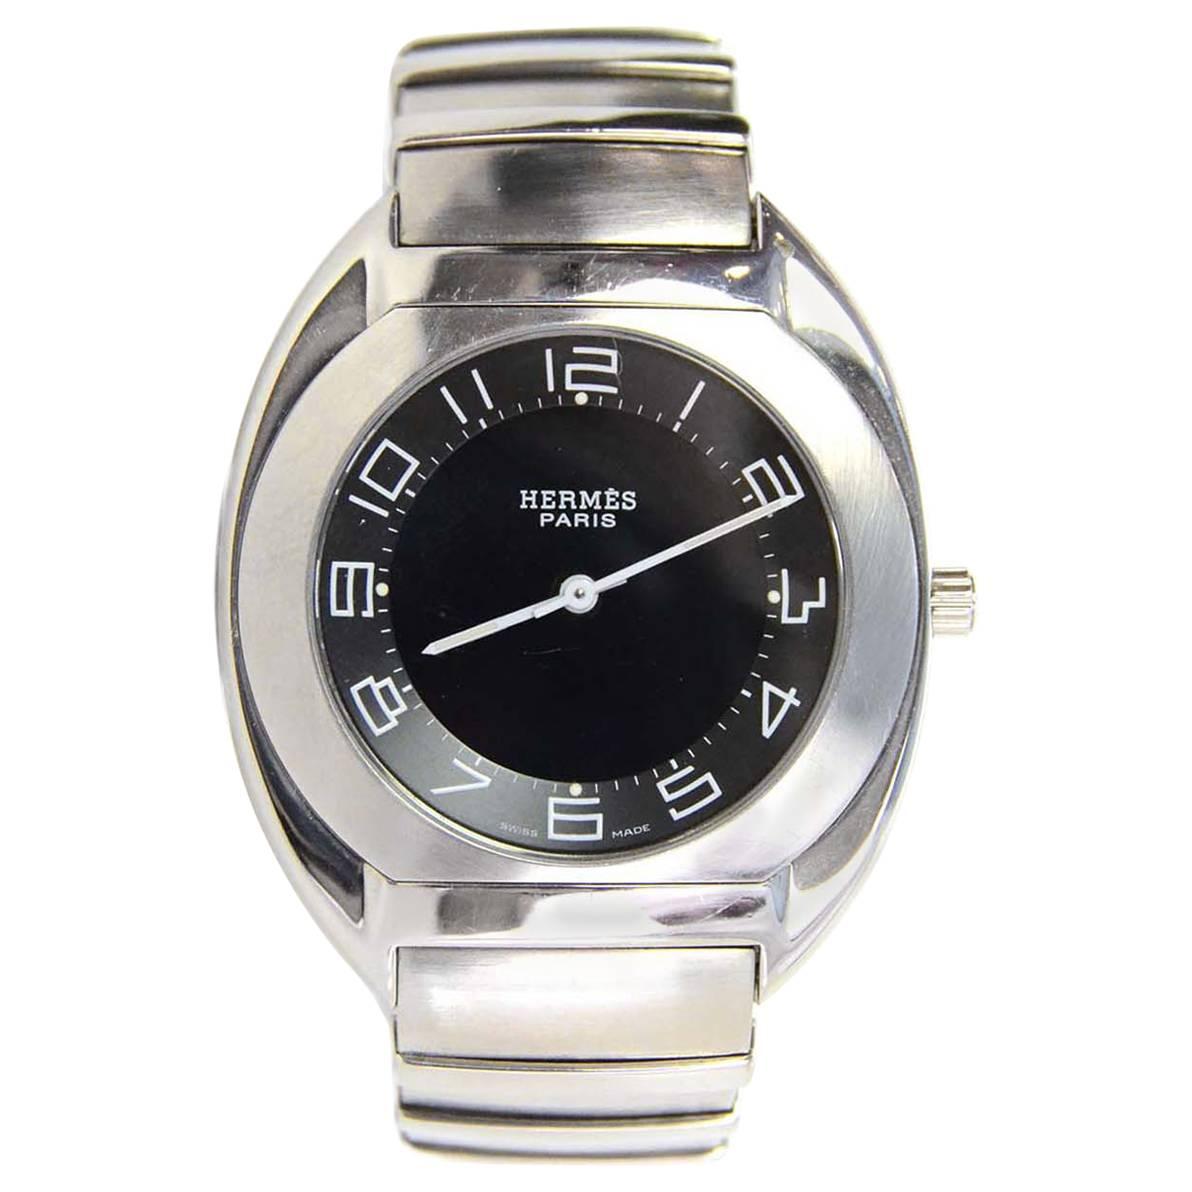 Hermes Men's 34mm Espace Stainless Steel Watch rt. $3, 150